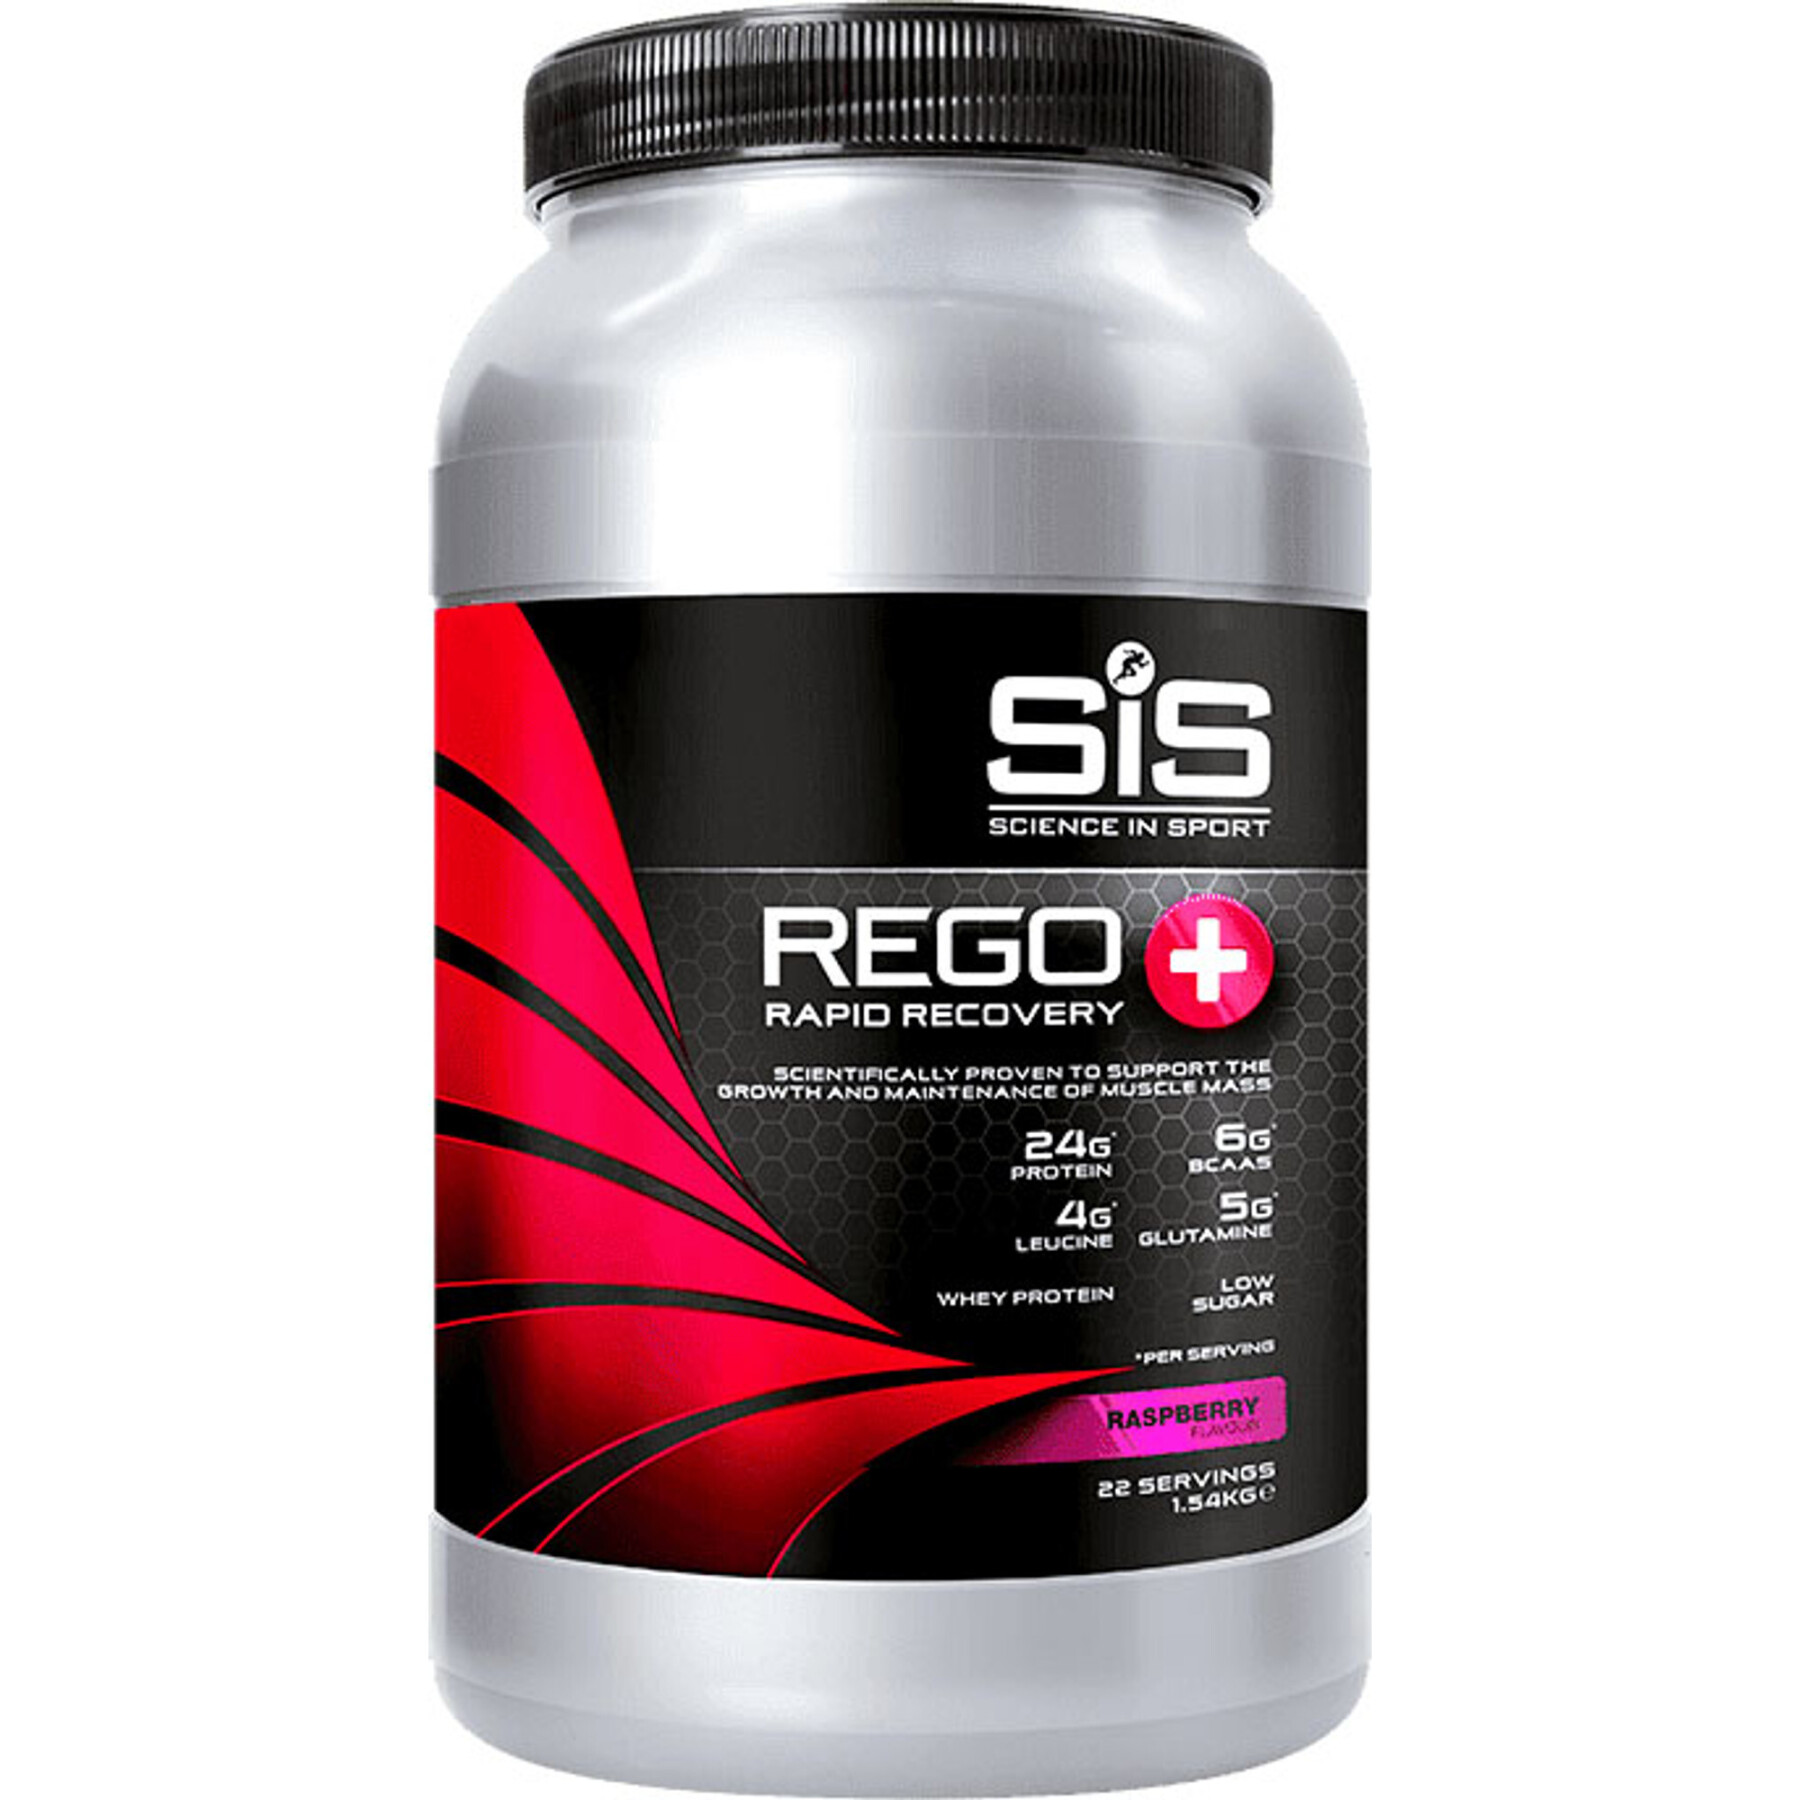 HersteldrankScience in Sport Rego Rapid Recovery - Rose framboise - 1.54 Kg